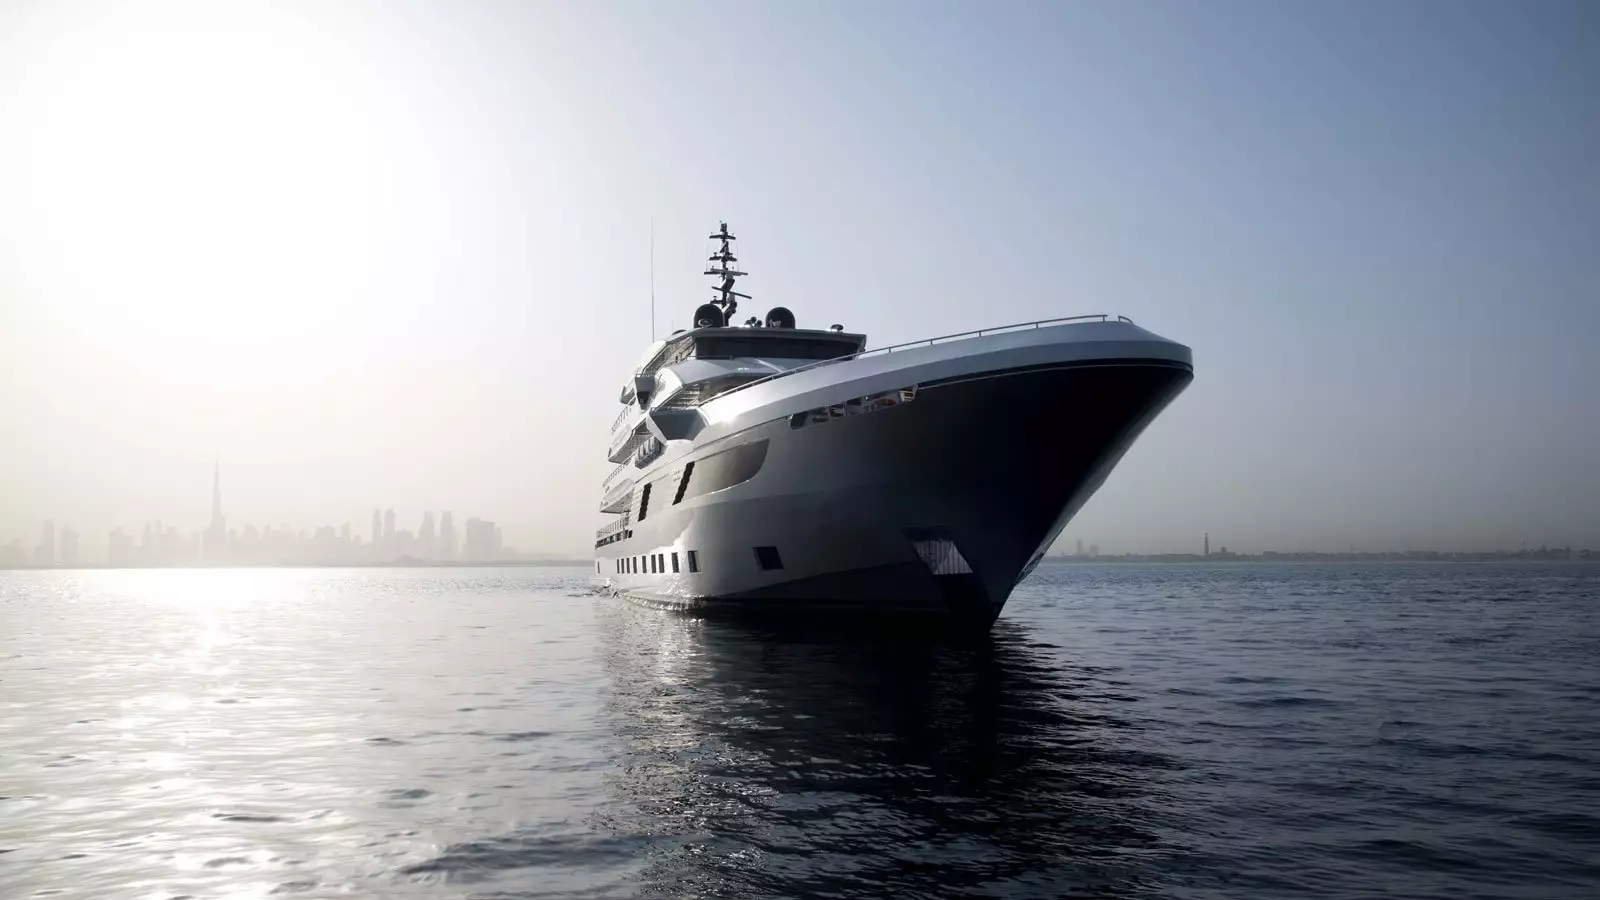 Яхта SERENITY MRF • Gulfcraft • 2021 г. • Владелец Мусаббе Рашид Аль Фаттан